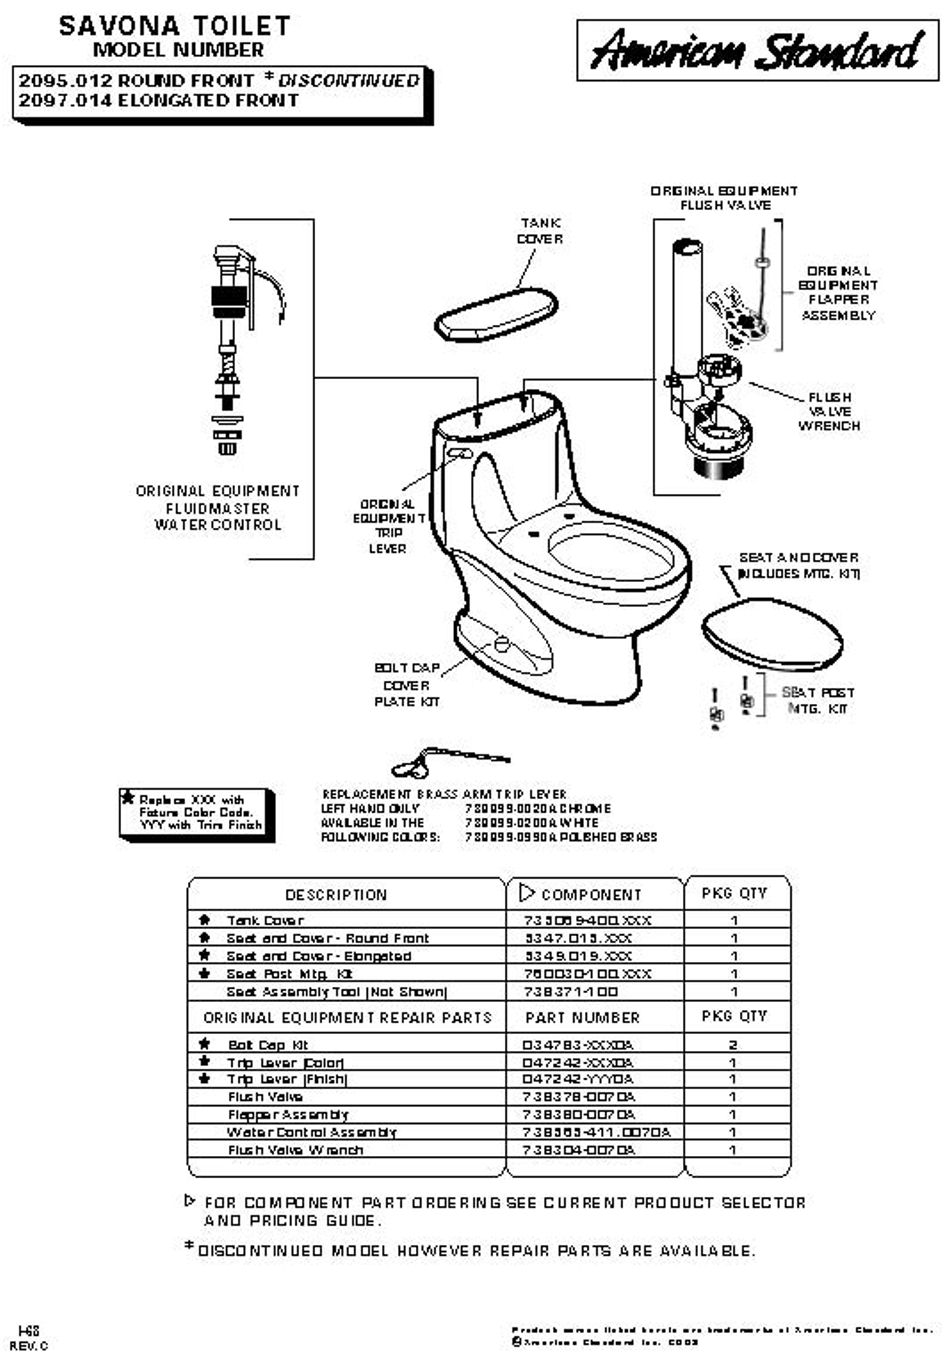 toiletpro-parts-breakdown-for-american-standard-2095-toilet